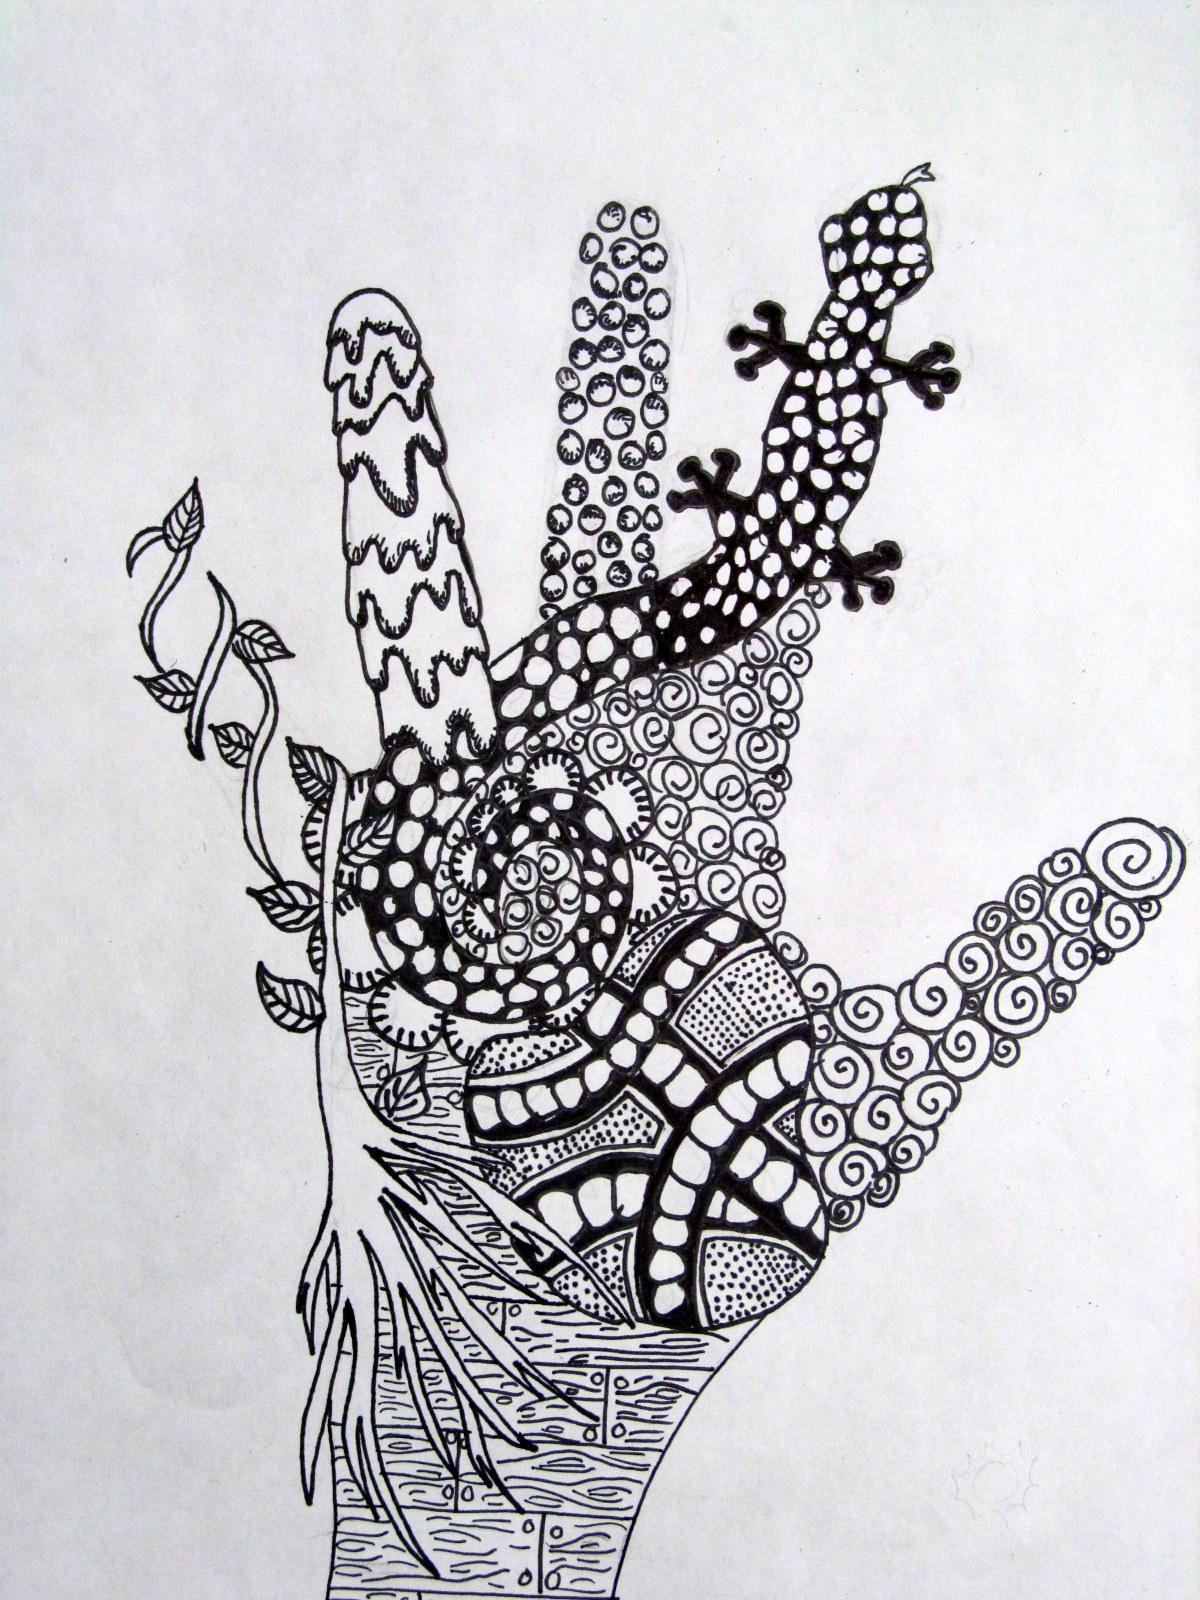 Ms. Eaton's Phileonia Artonian: Hand Doodle Textures